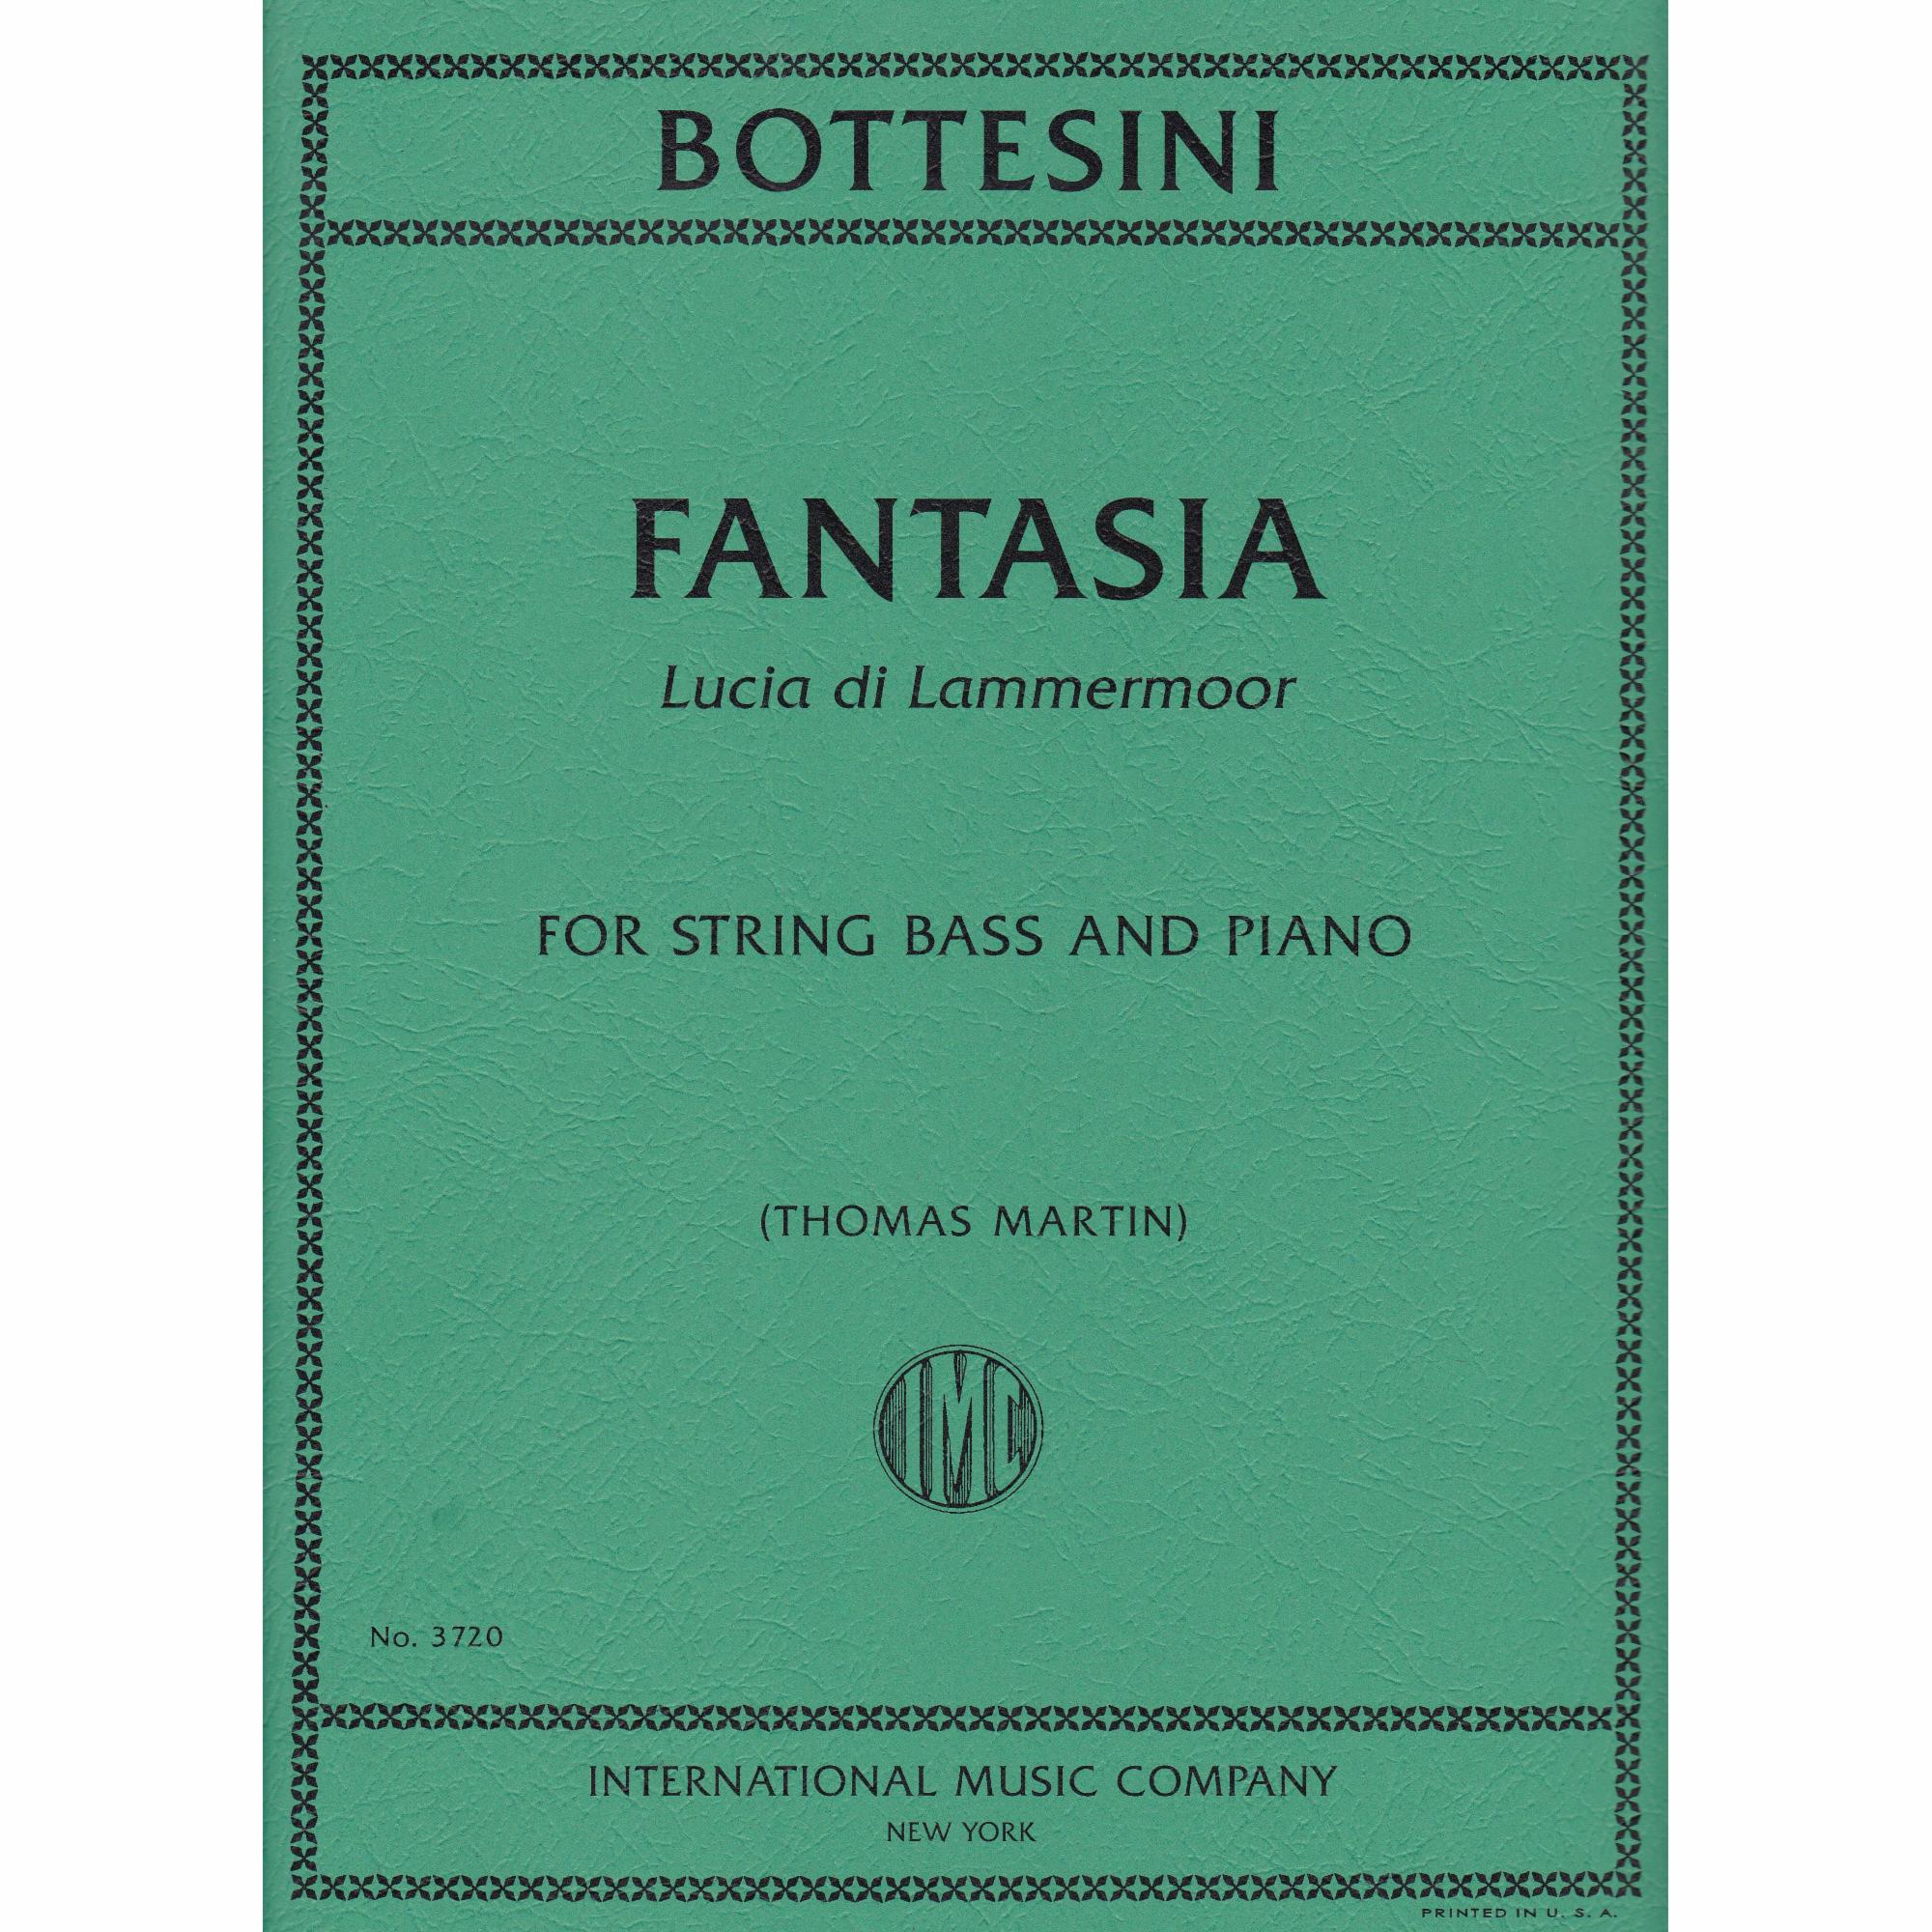 Fantasia on Lucia di Lammermoor for Bass